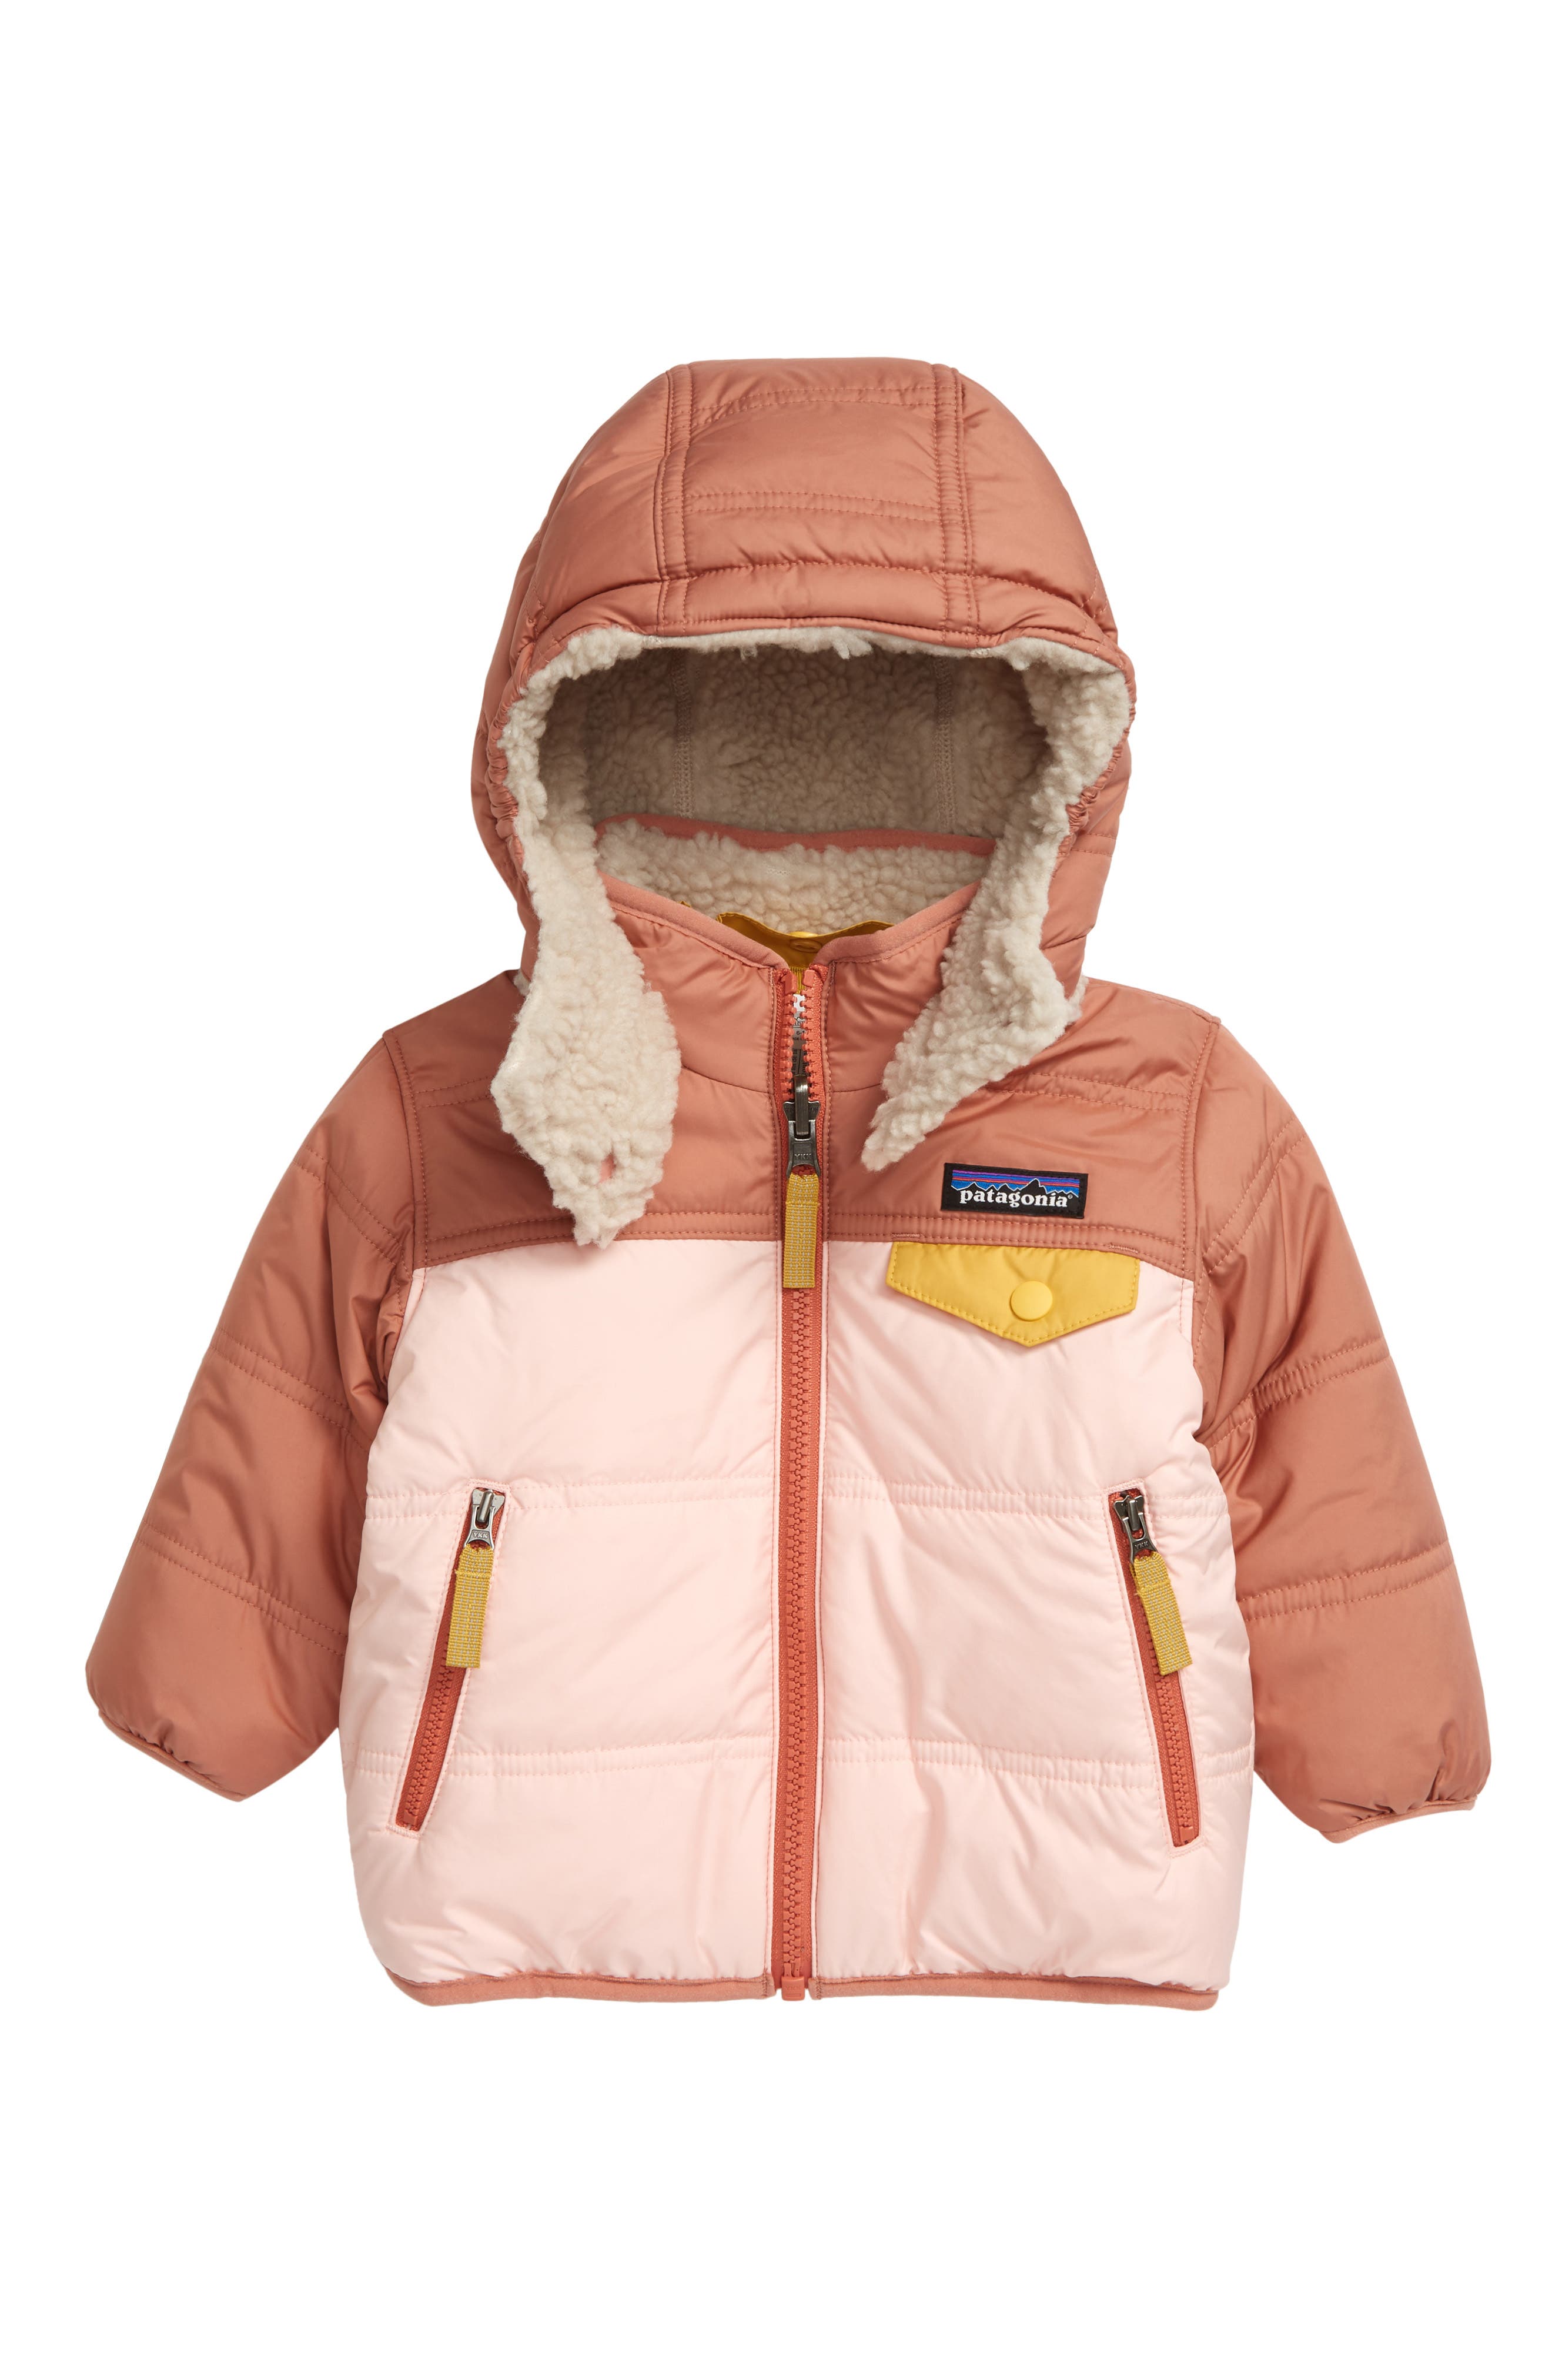 baby girl spring jacket canada